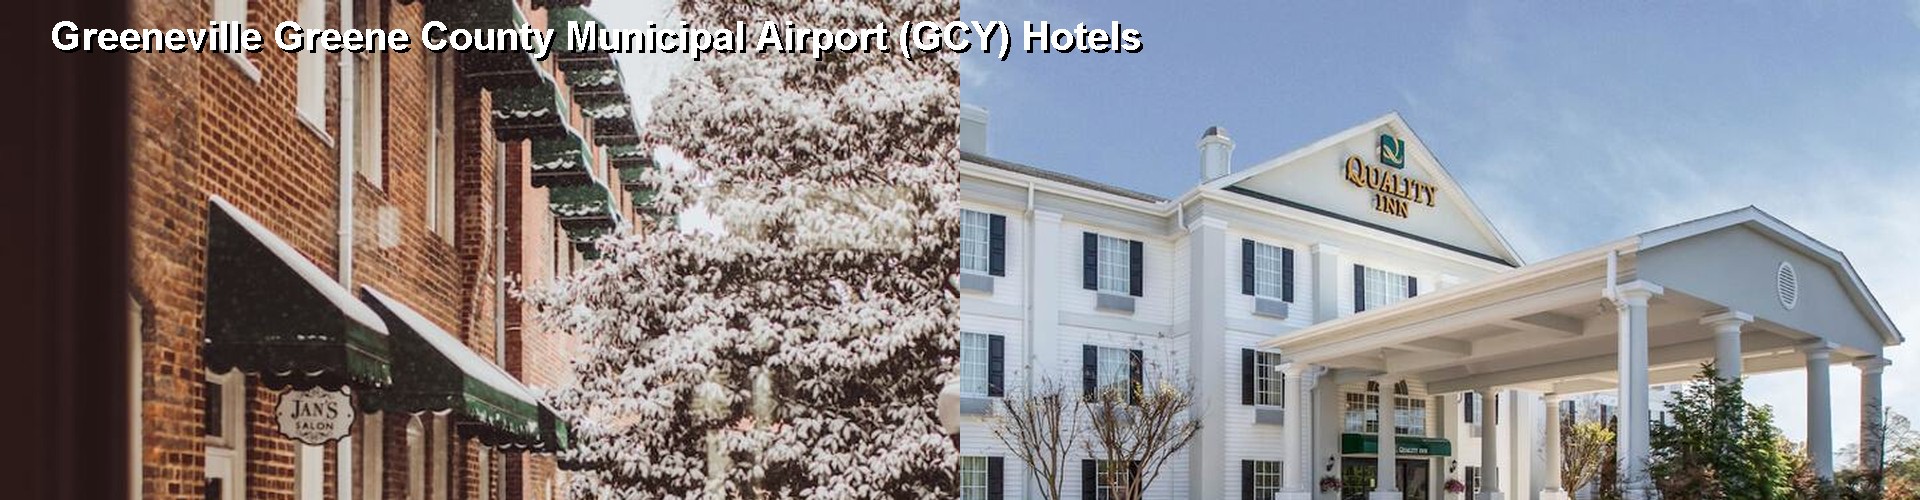 4 Best Hotels near Greeneville Greene County Municipal Airport (GCY)